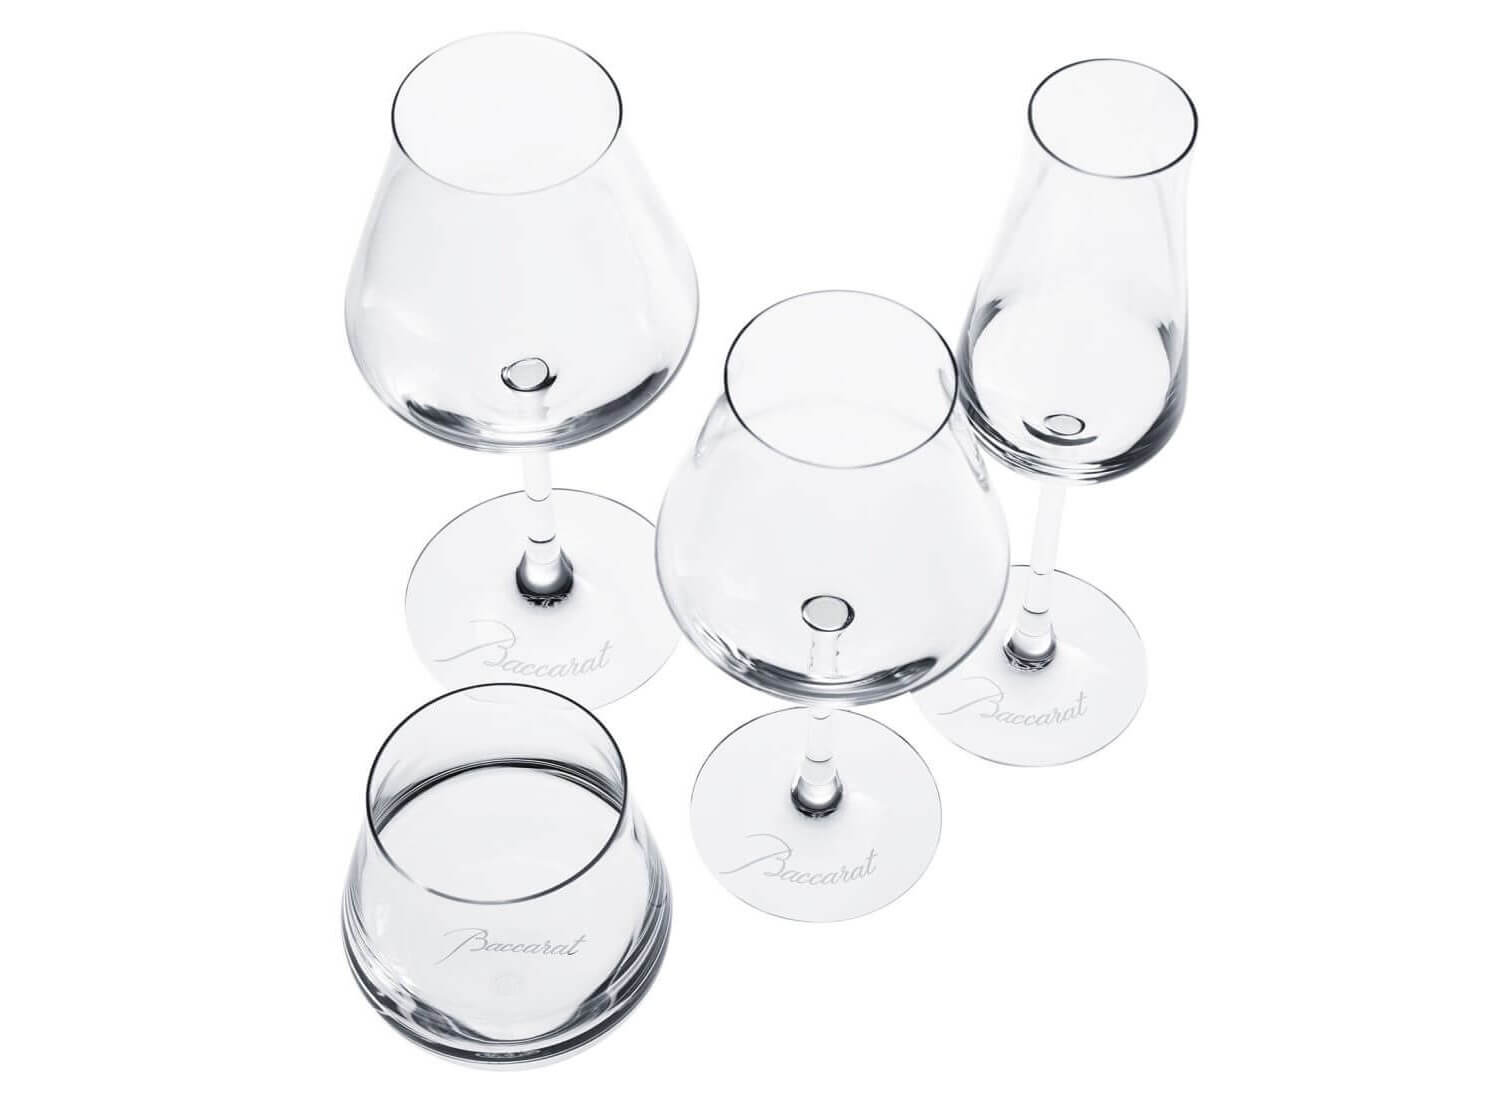 Baccarat Château Degustation Glass Set